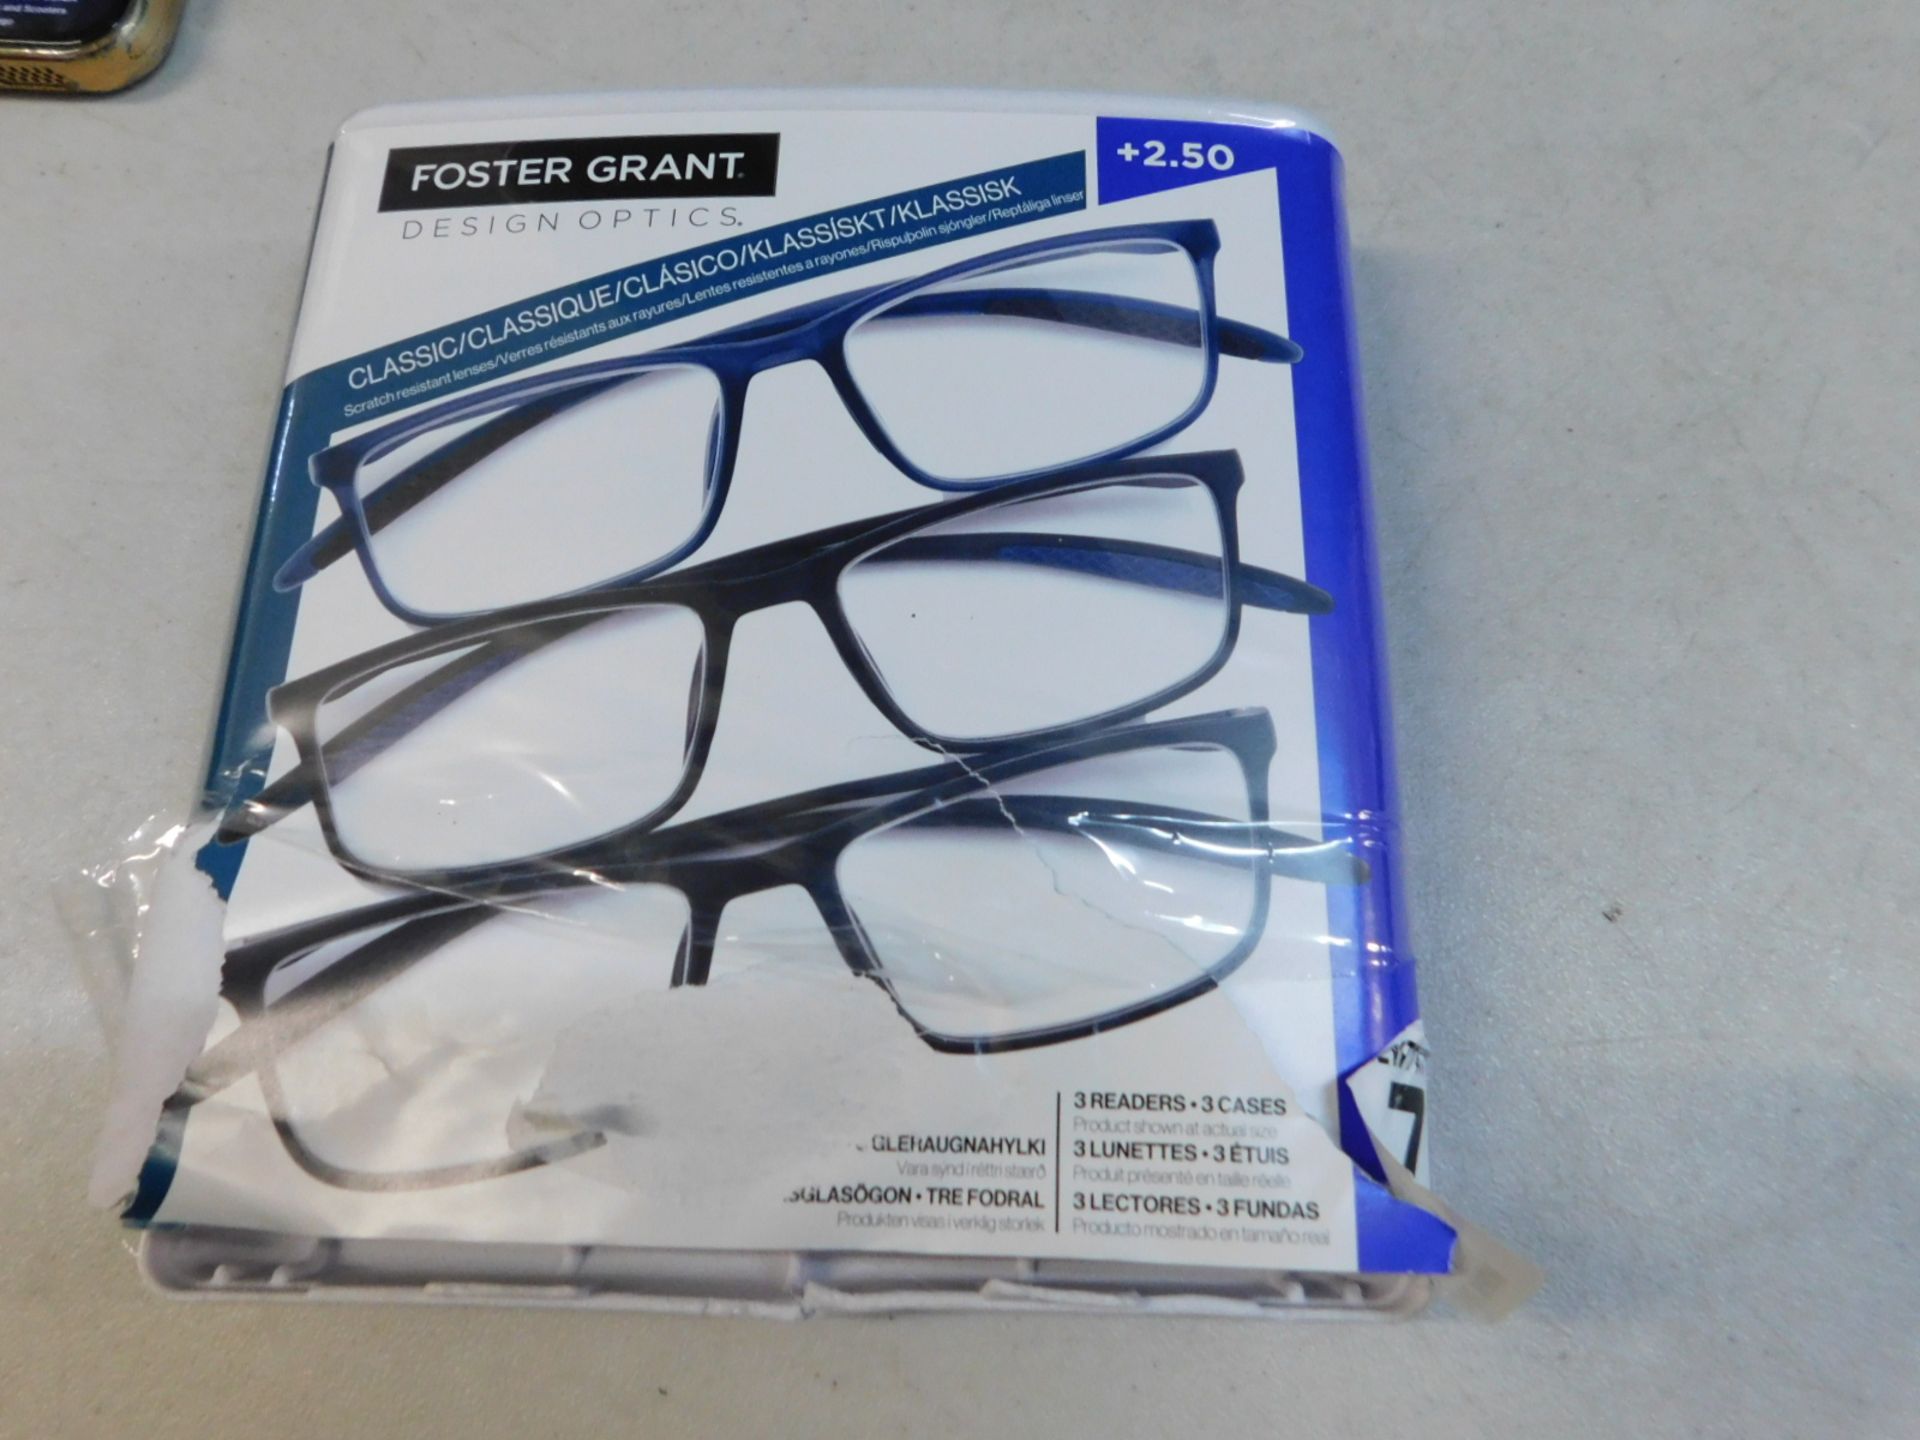 1 BOXED FOSTER GRANT DESIGN OPTICS +2.50 READING GLASSES RRP Â£19